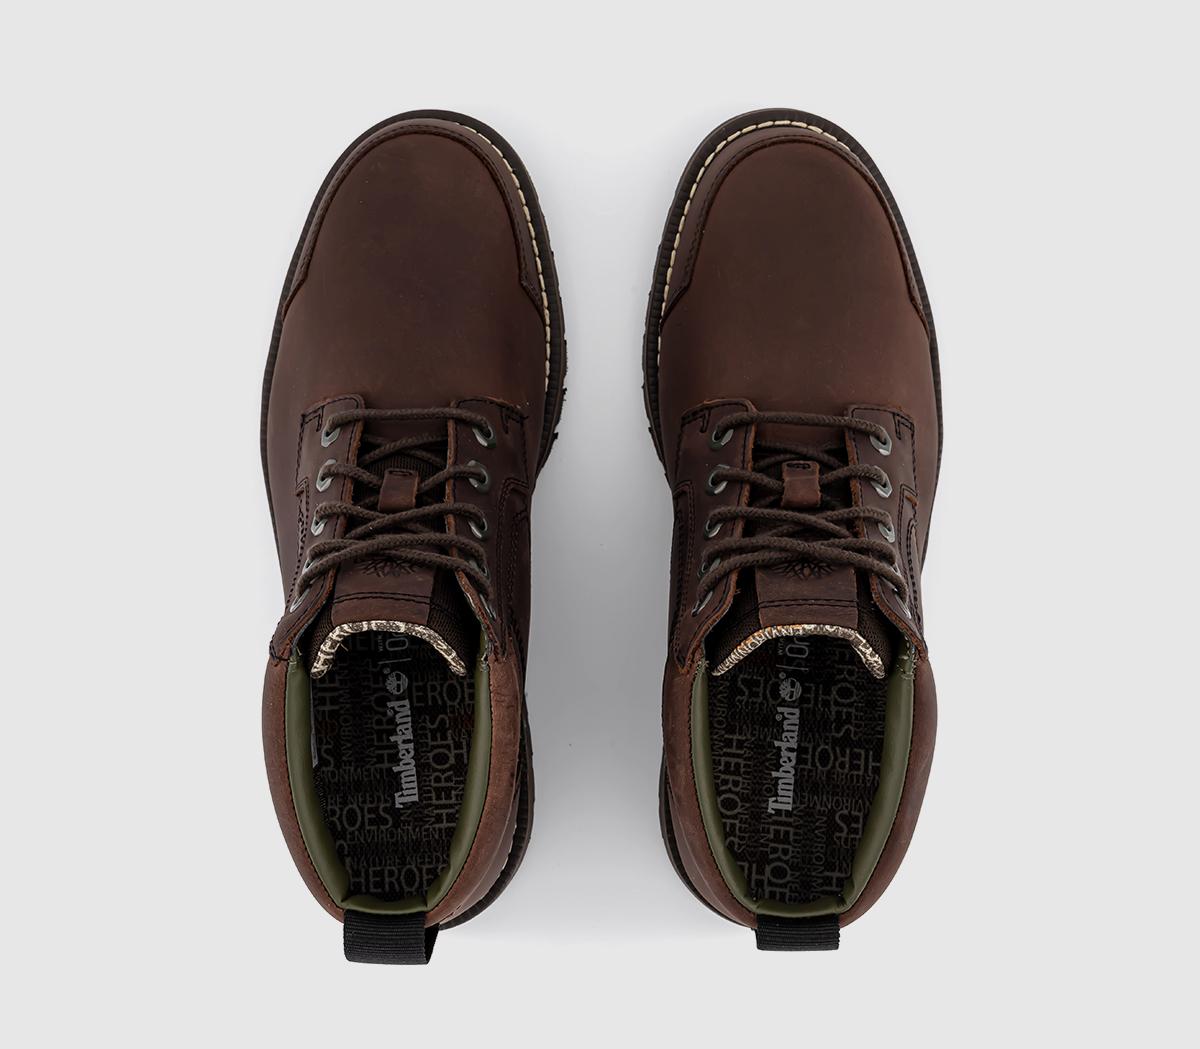 Timberland Larchmont Chukka Boots Dark Brown Full Grain - Men’s Boots